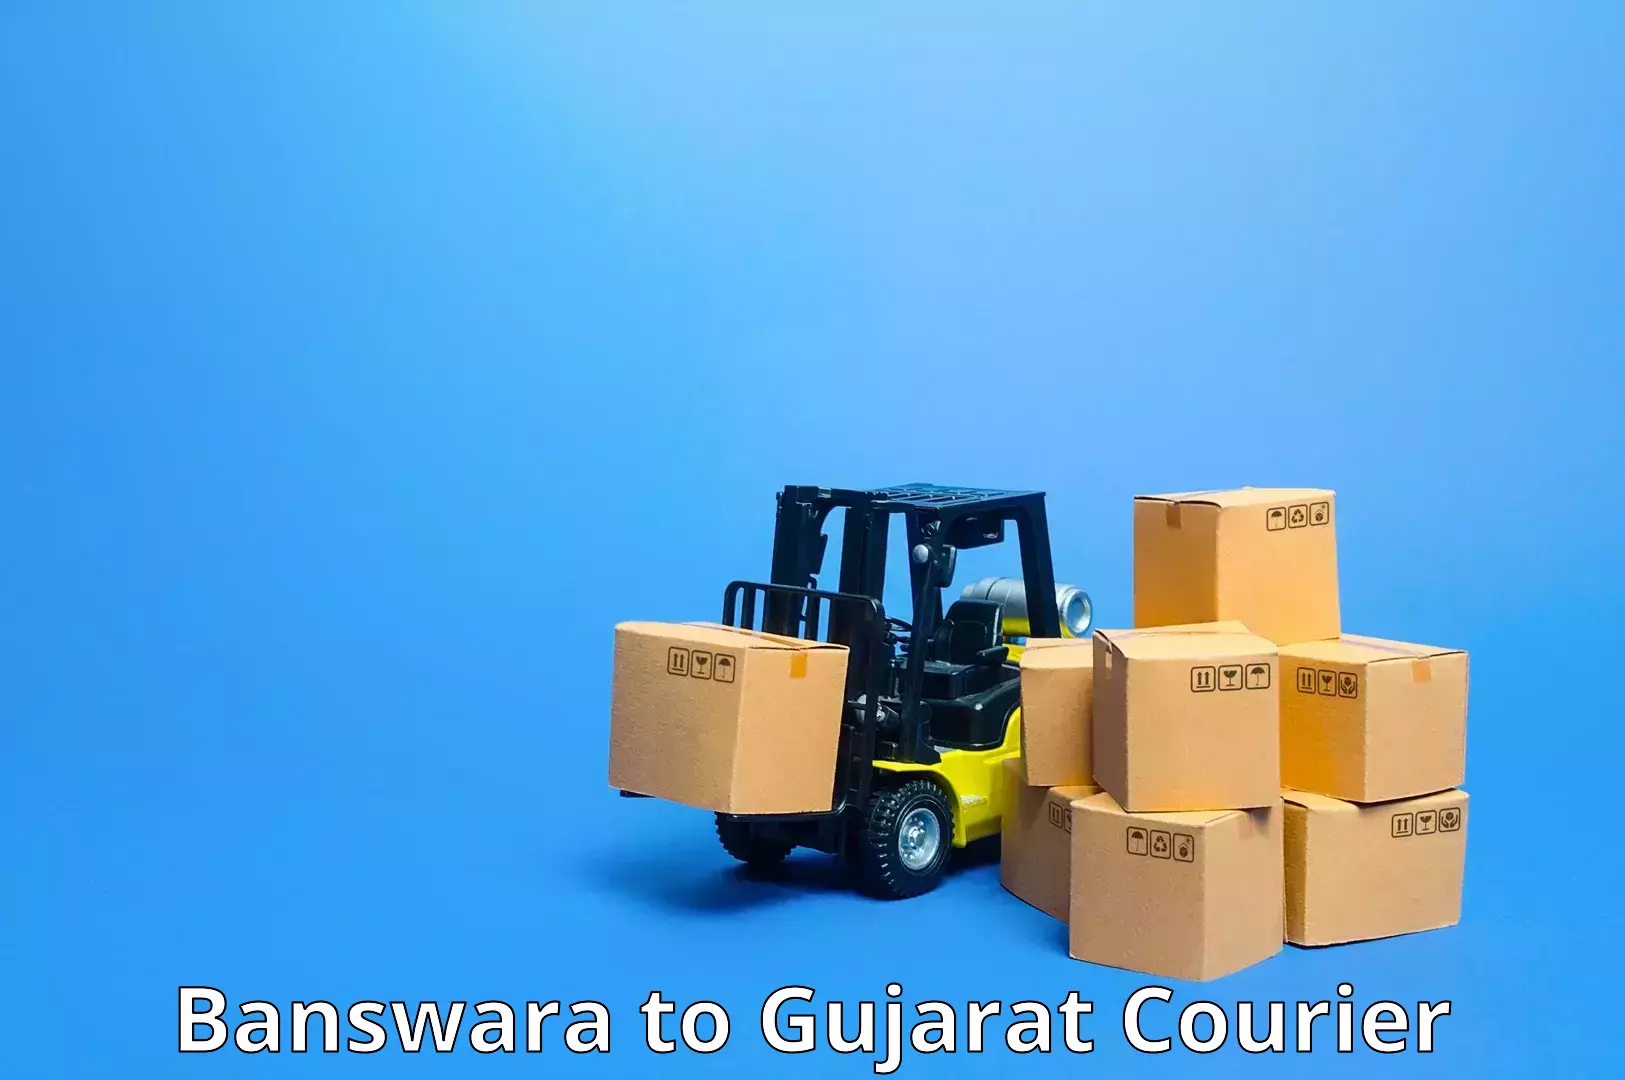 Global shipping networks Banswara to Bhuj